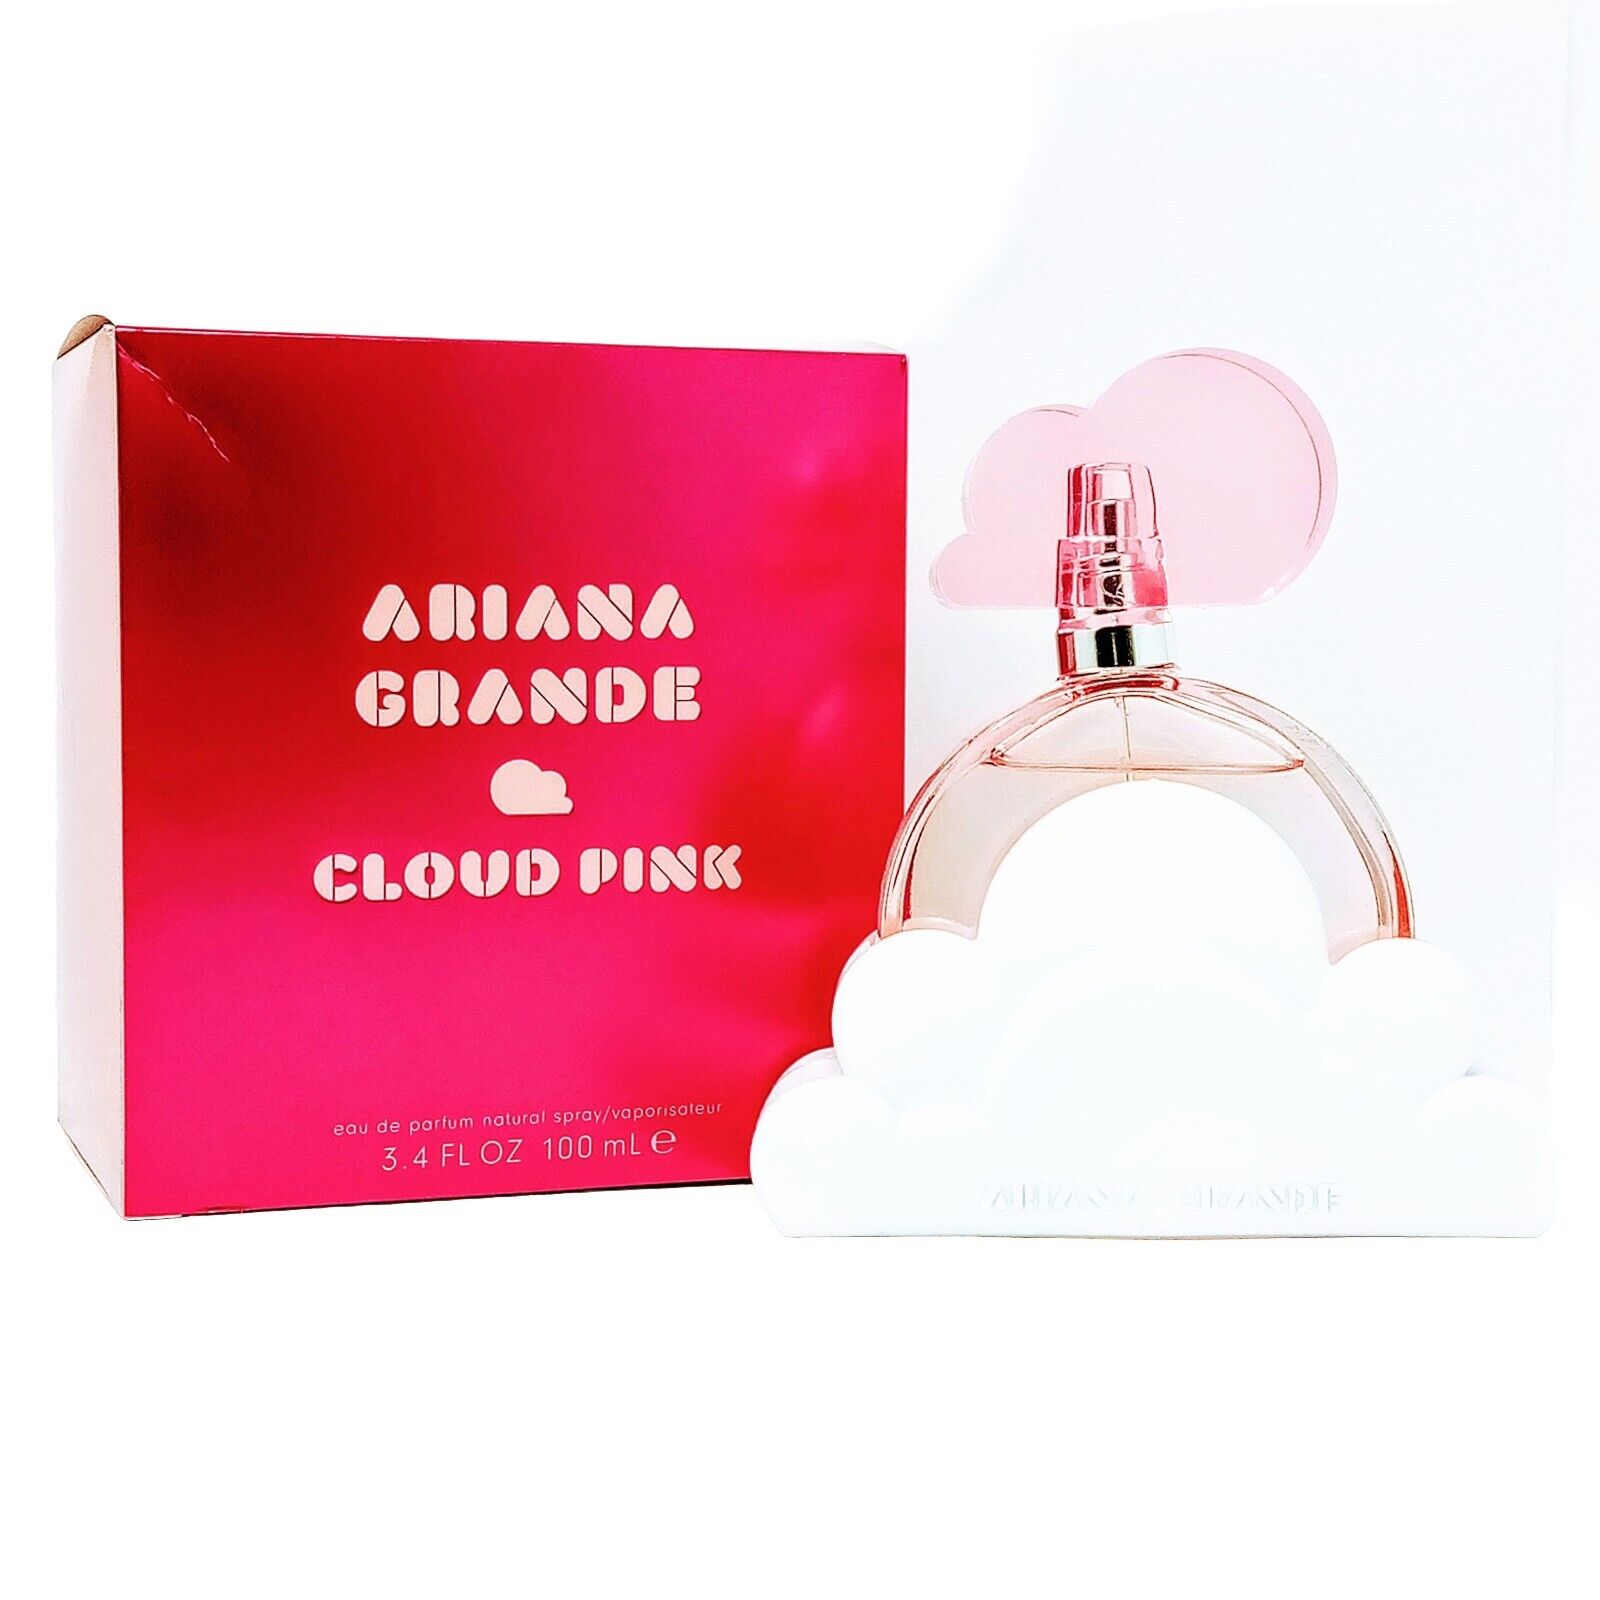 Ariana Grande Cloud Pink - Charming 3.4oz Eau de Parfum, Sealed